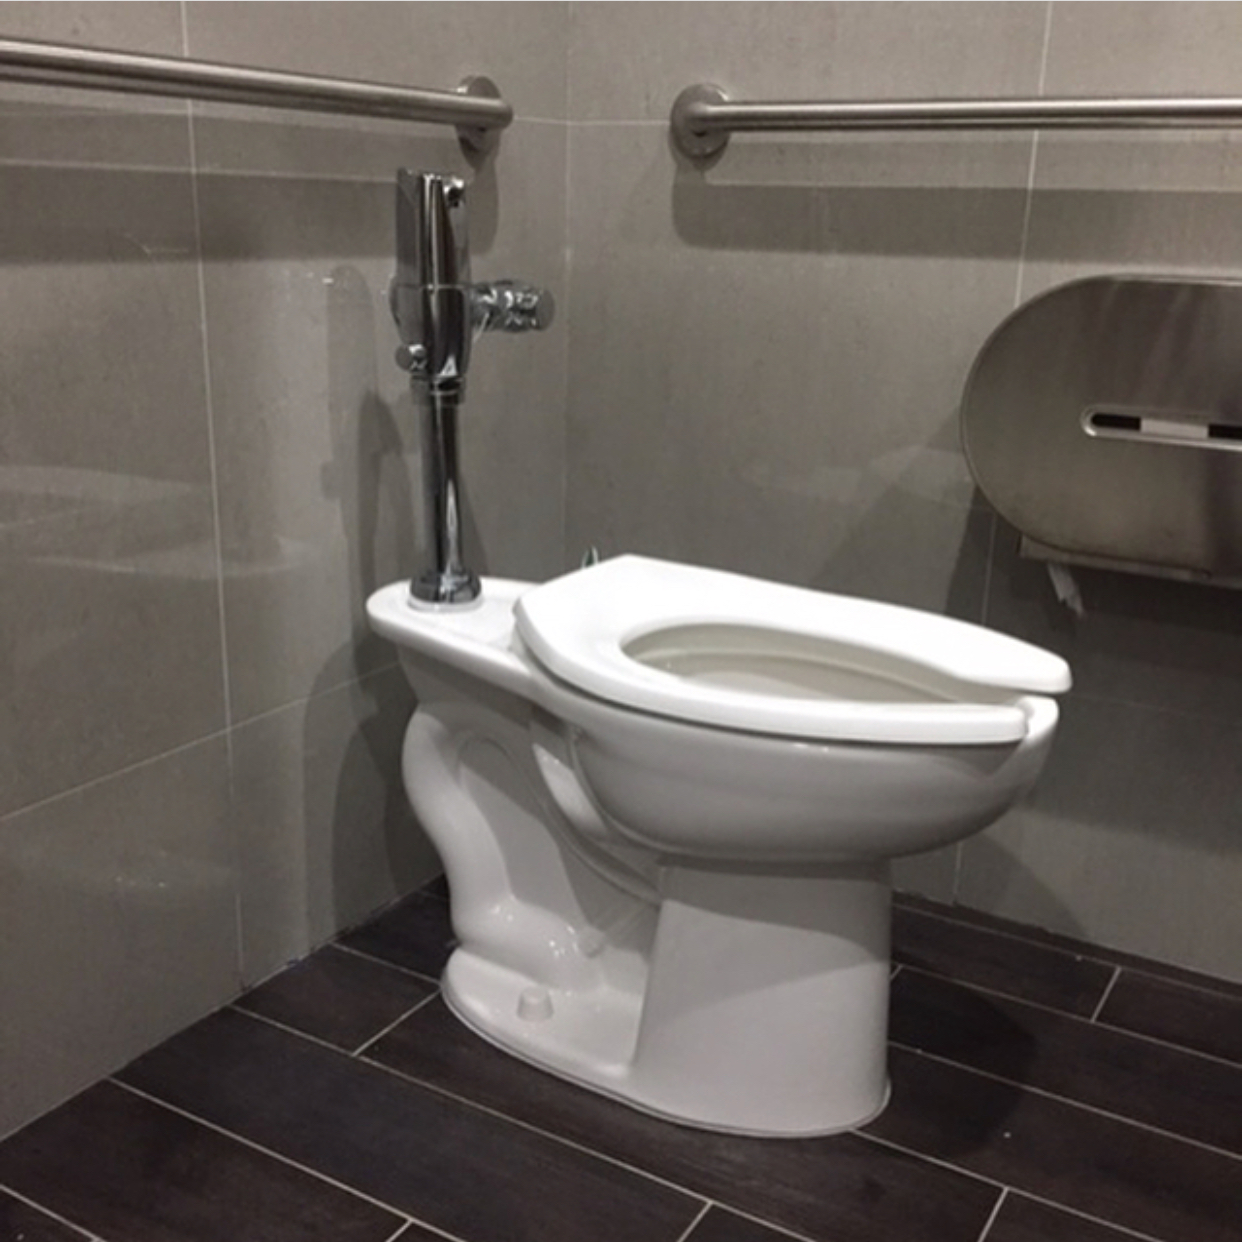 Commercial Toilet Installation Plumber Plumbing Miami Florida